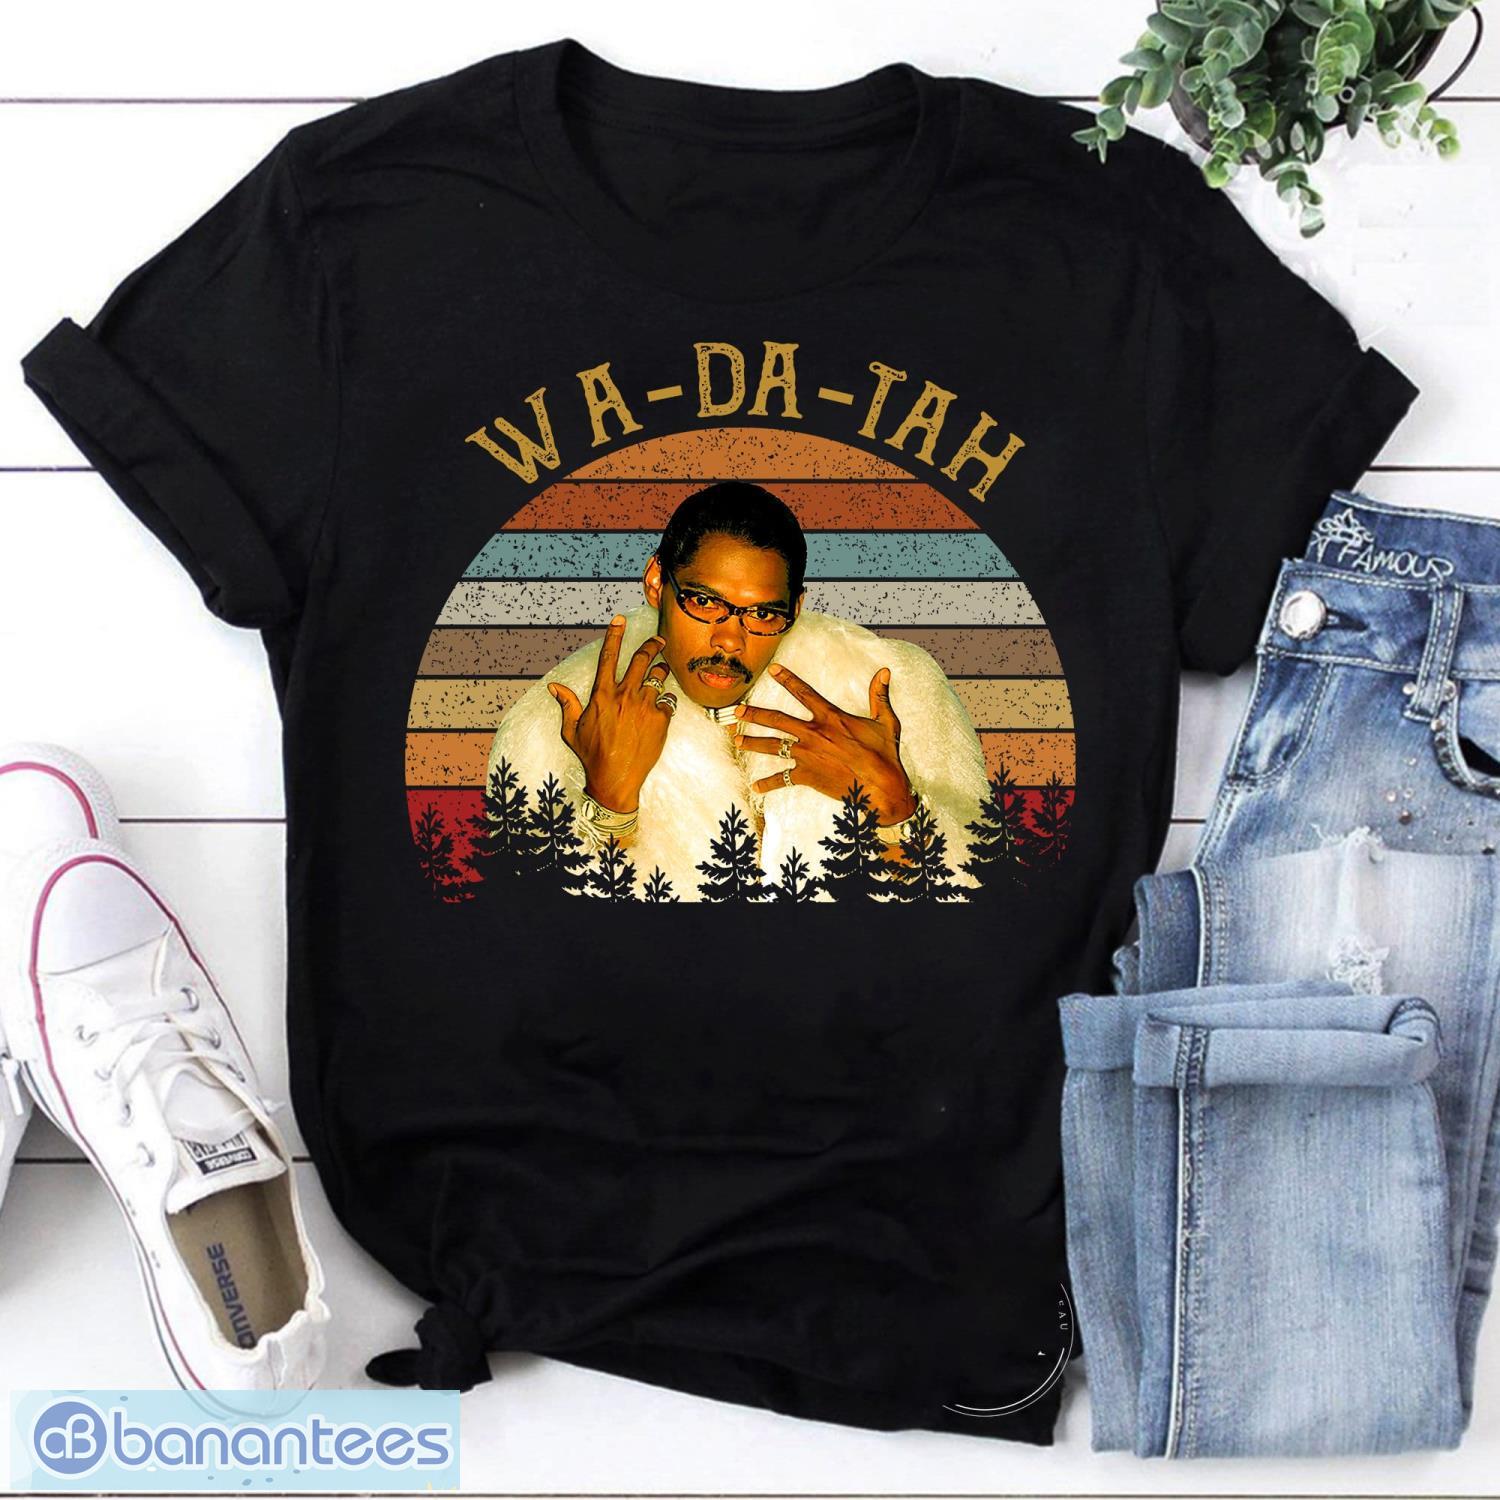 Wa-da-tah Vintage T-Shirt, Pootie Tang Movie Shirt, For Pootie Tang Shirt, Funny Movies Shirt, Daddy Tang Shirt Product Photo 1